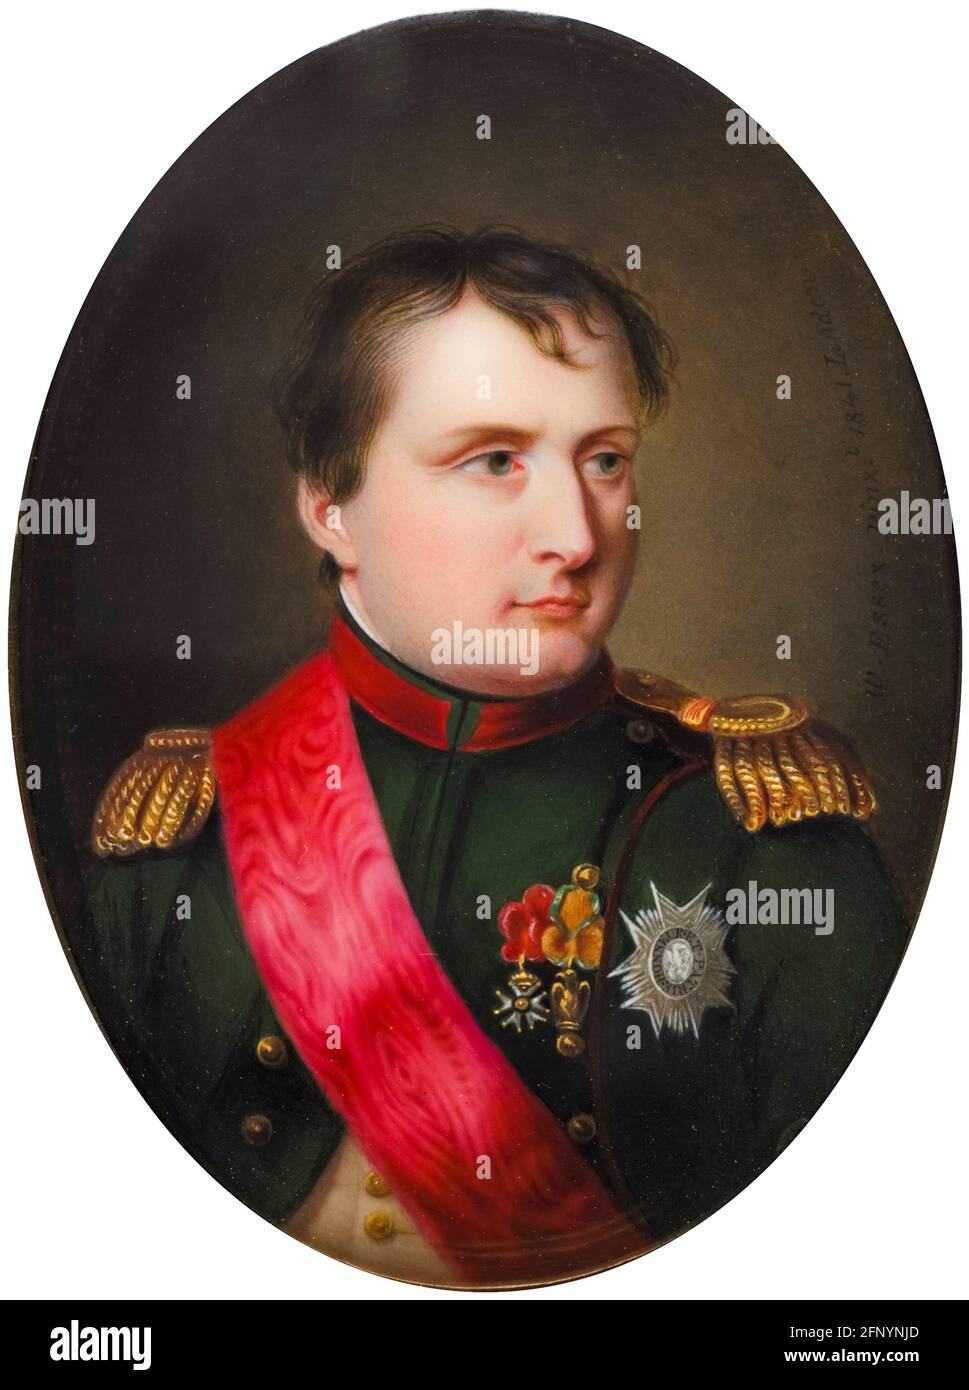 Napoléon Bonaparte (1769-1821), Emperor of France as Napoleon Bonaparte I, portrait miniature by William Essex, 1841 Stock Photo